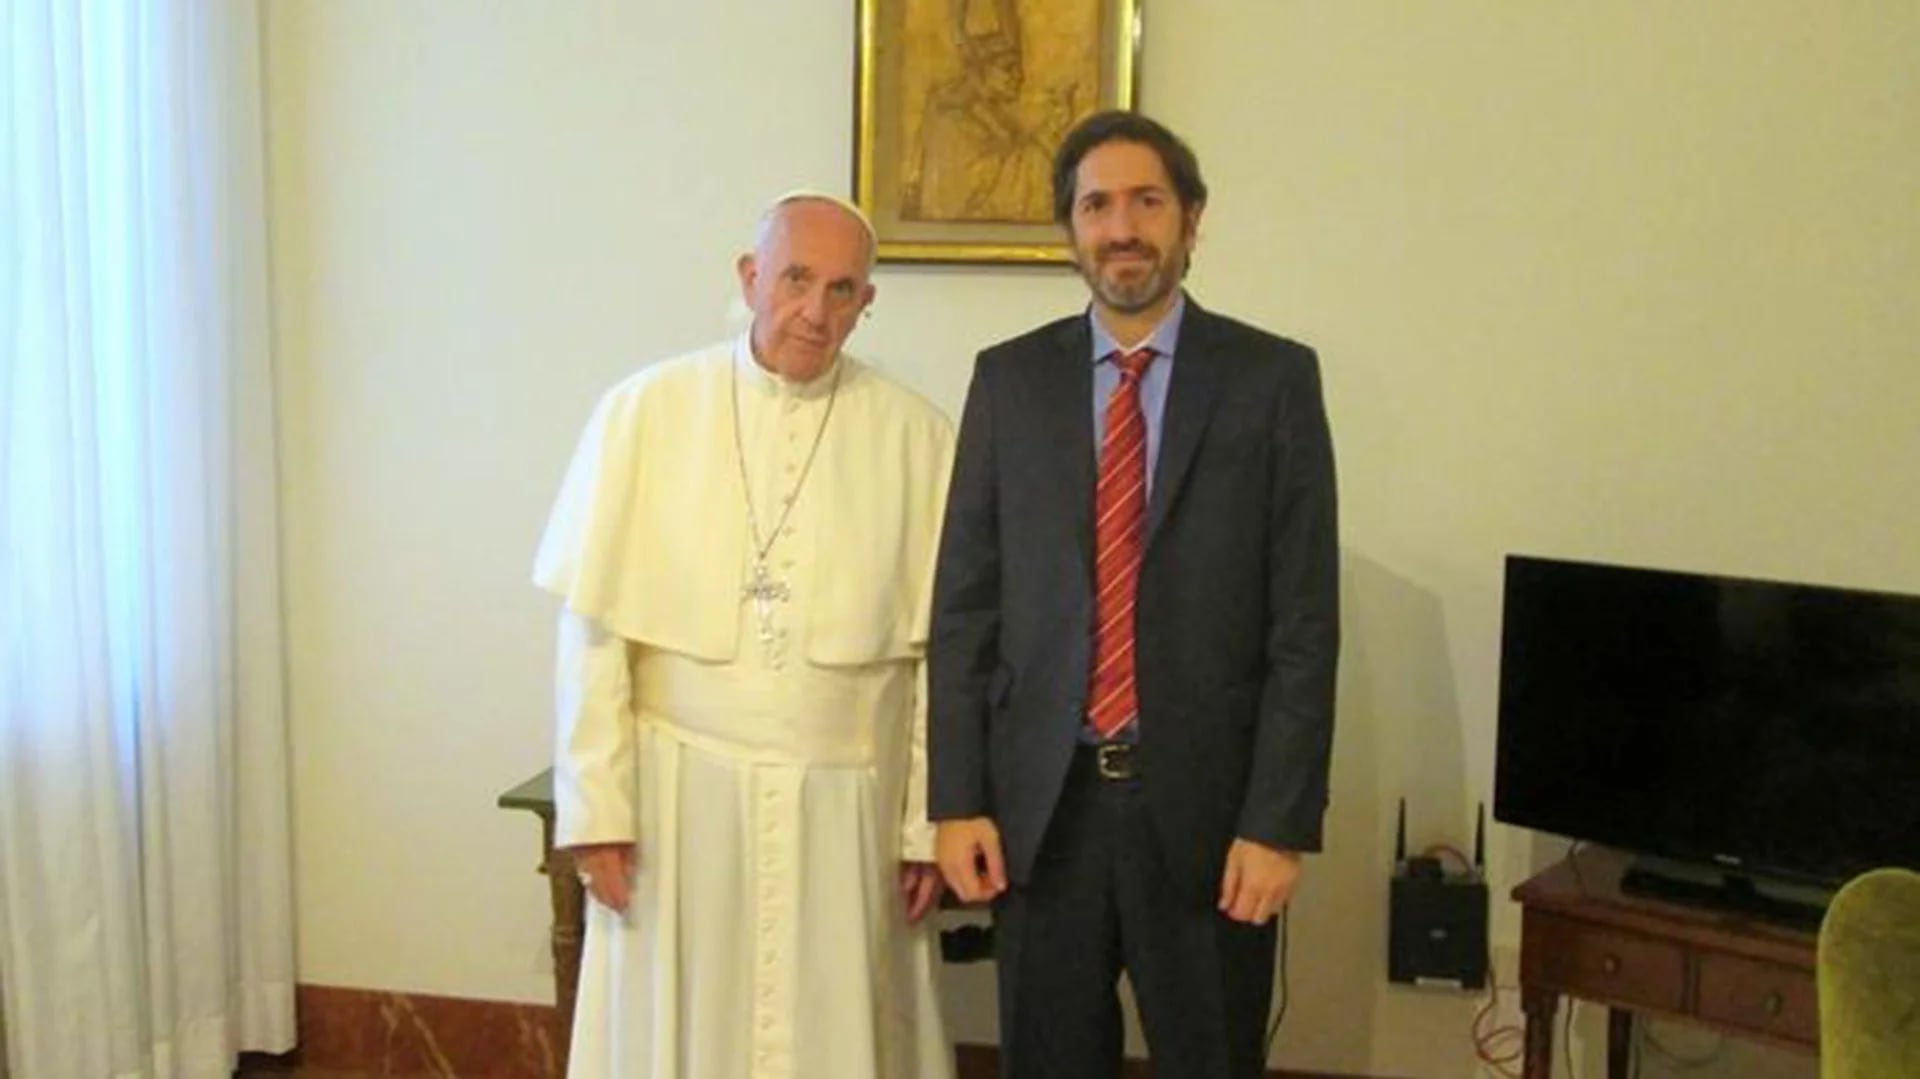 La imagen del juez Sebastián Casanello, que investiga a Cristina Kirchner, con el papa Francisco. (Twitter: SACROPROFANO)